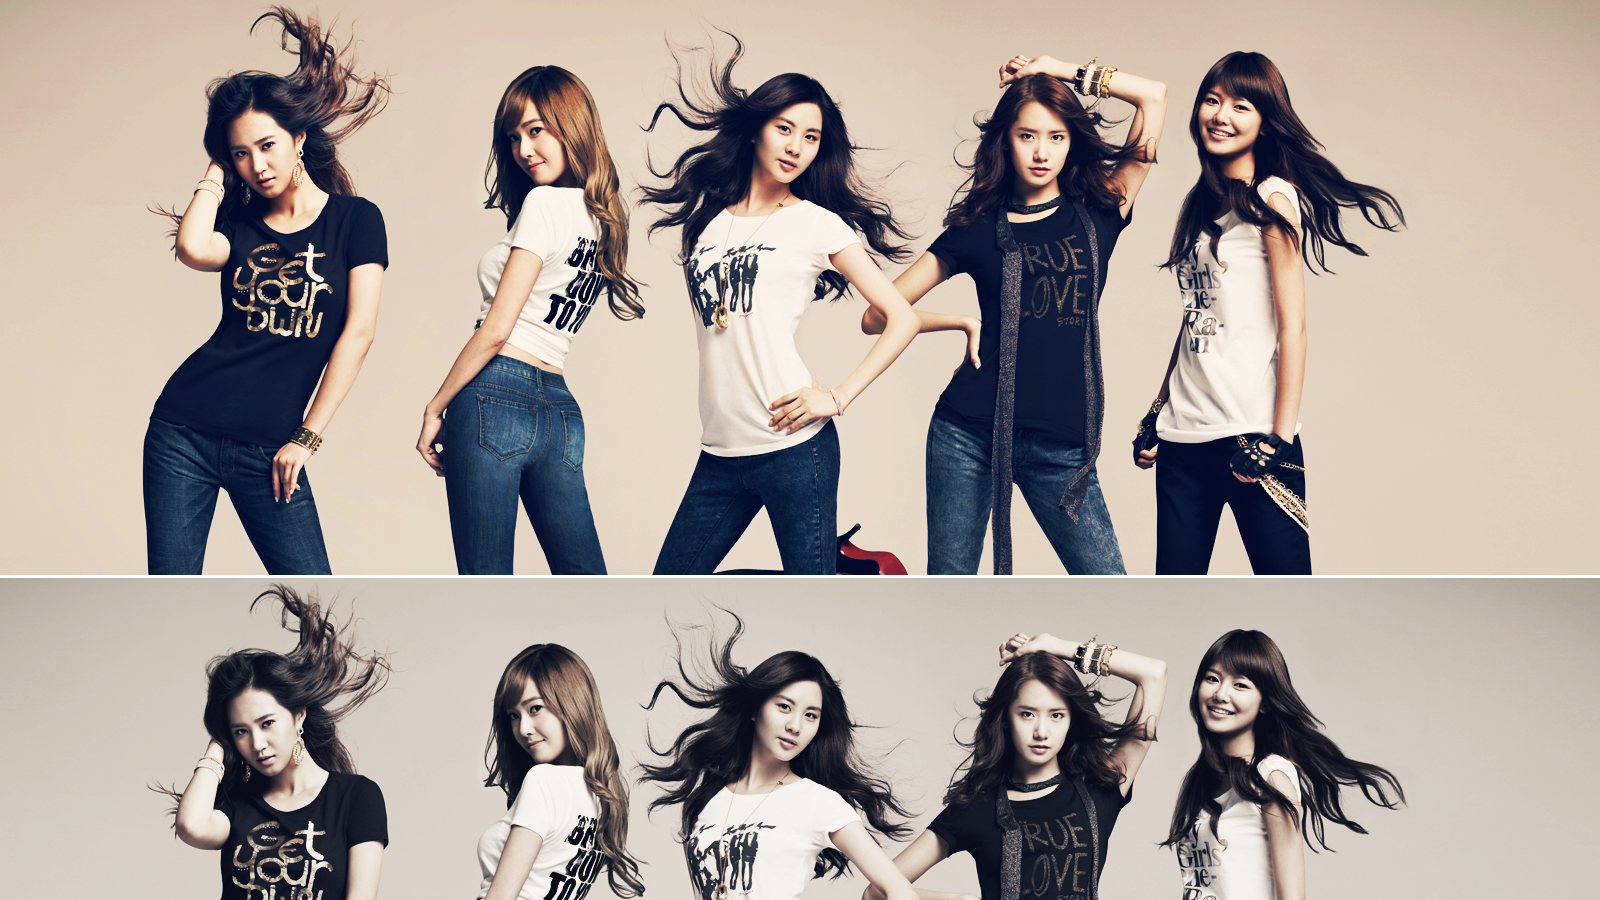 Snsd Girls Generation Wallpaper